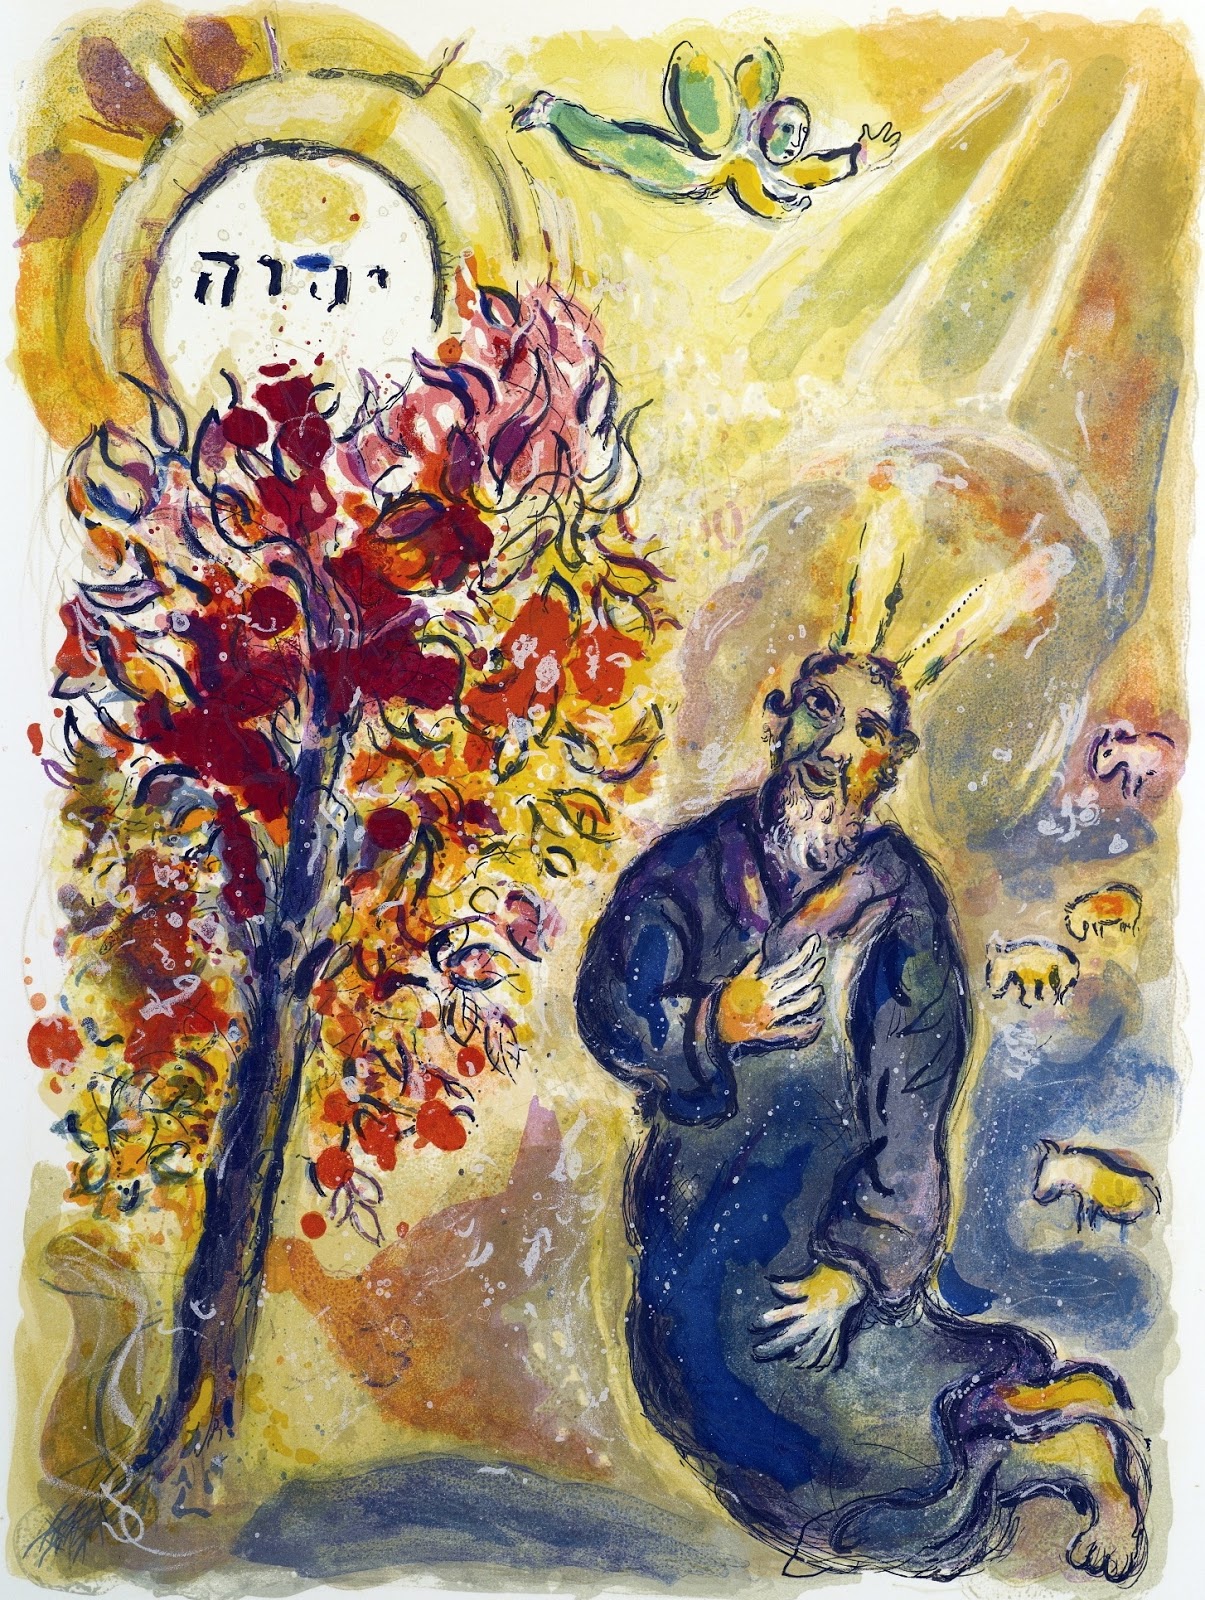 Marc+Chagall-1887-1985 (304).jpg